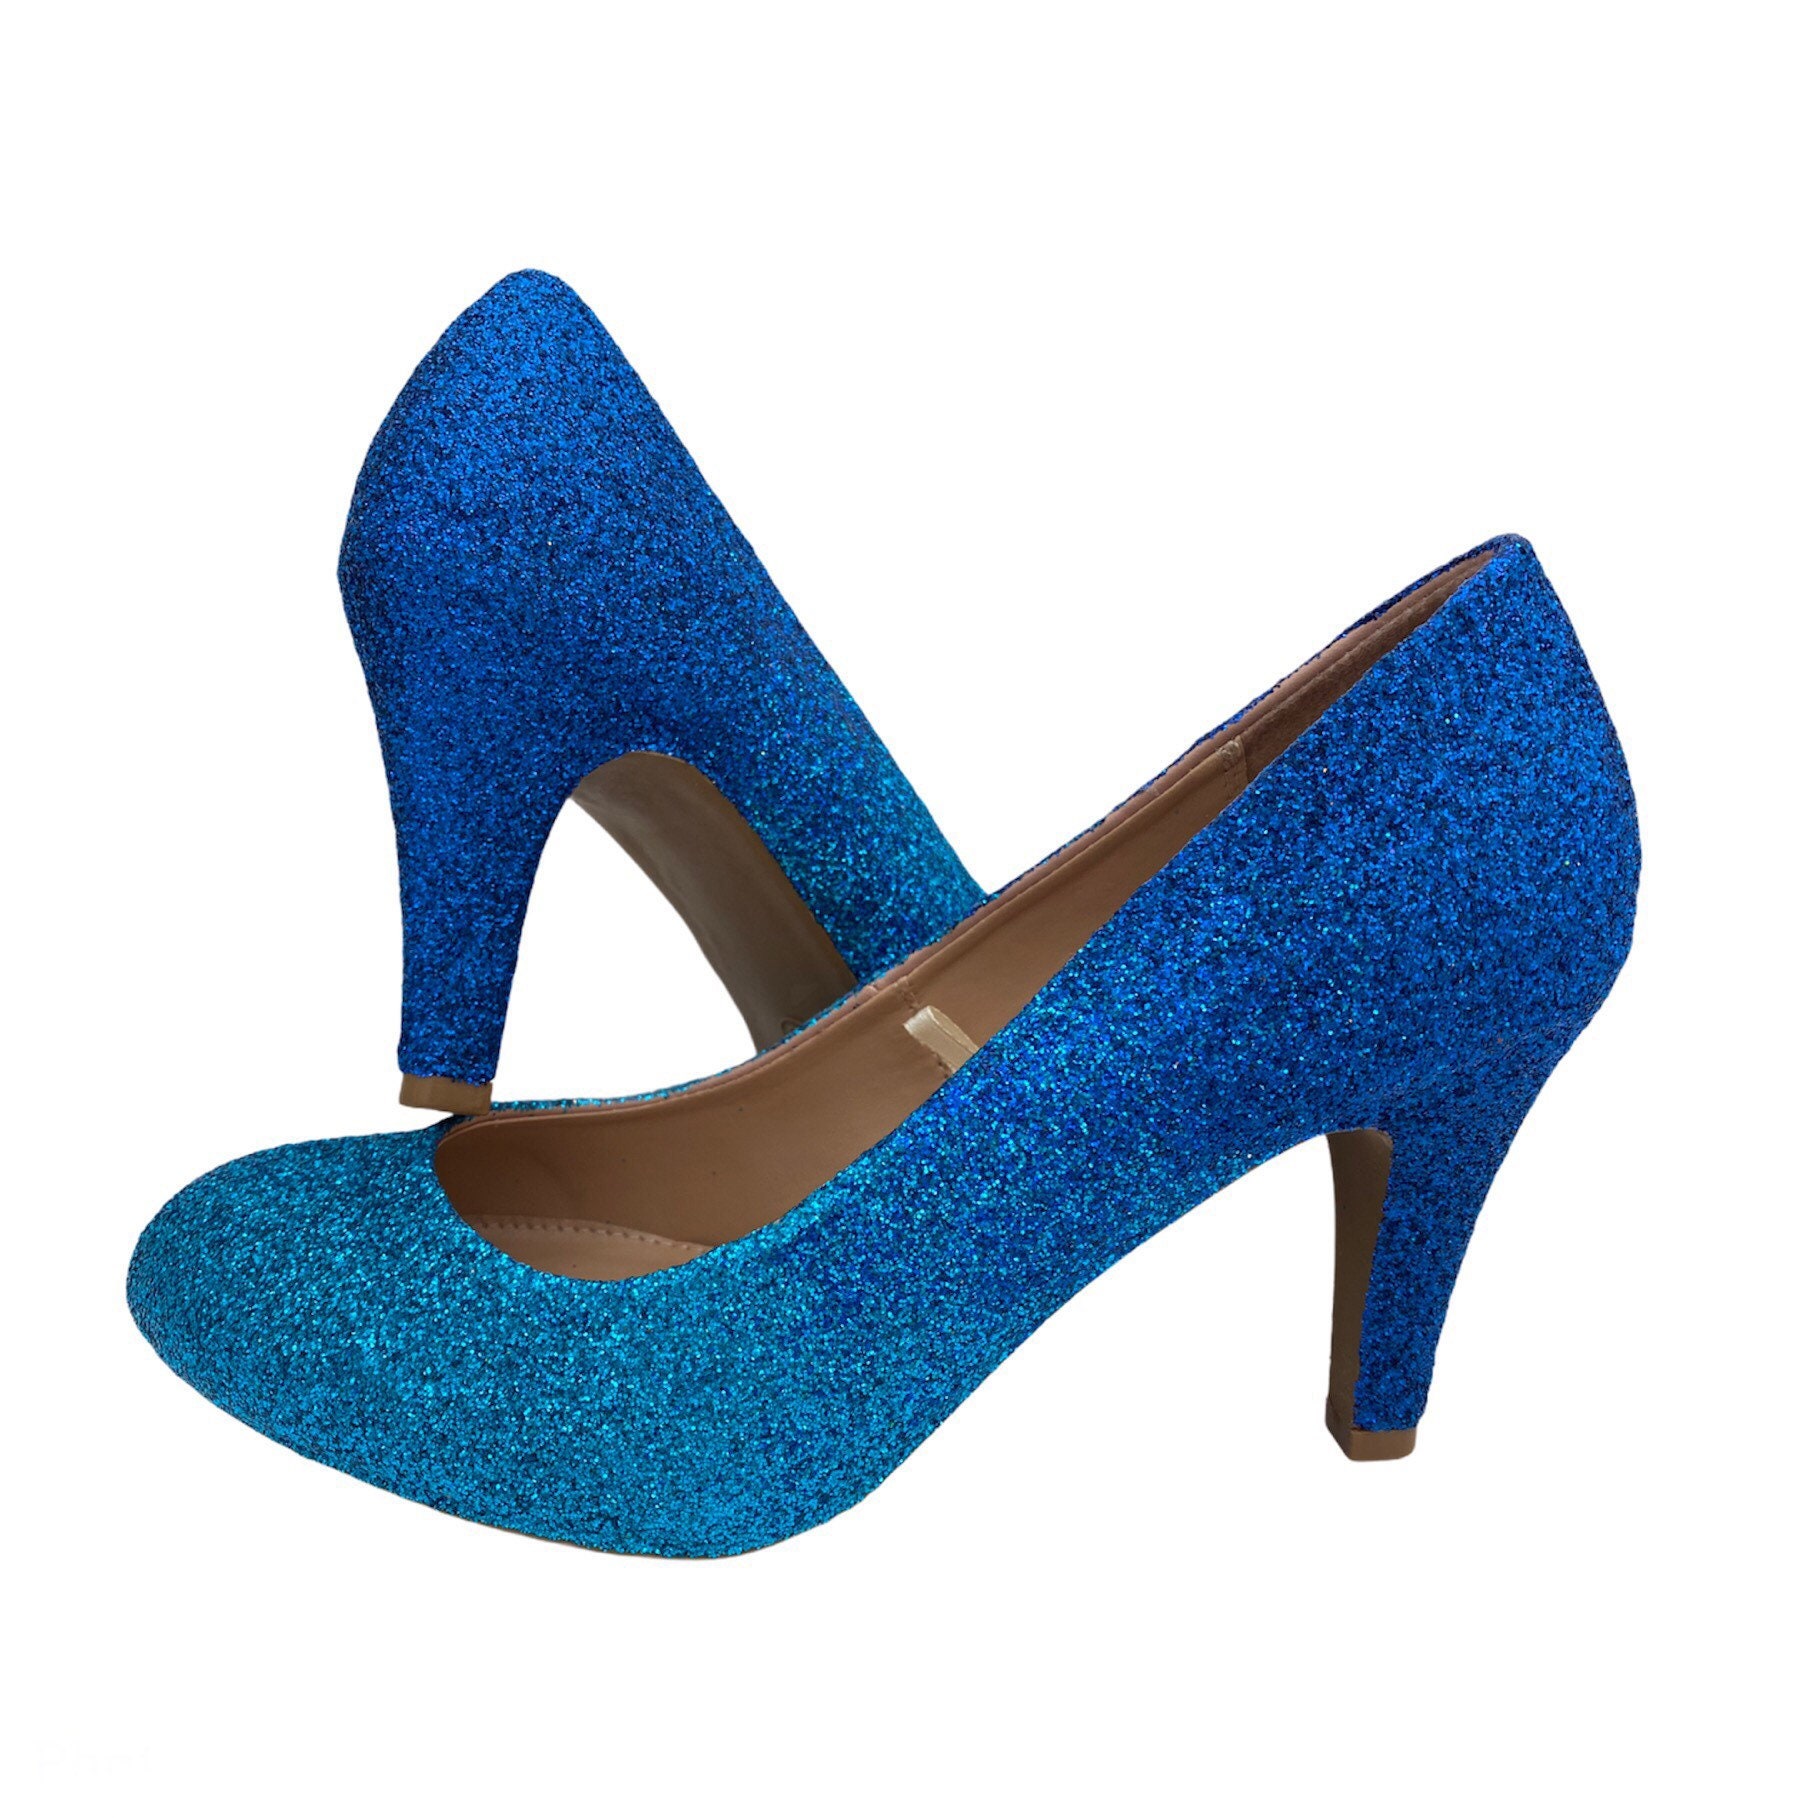 Andrew Geller Blue Suede pumps with sparkle heel | Blue suede pumps, Sparkle  heels, Suede pumps